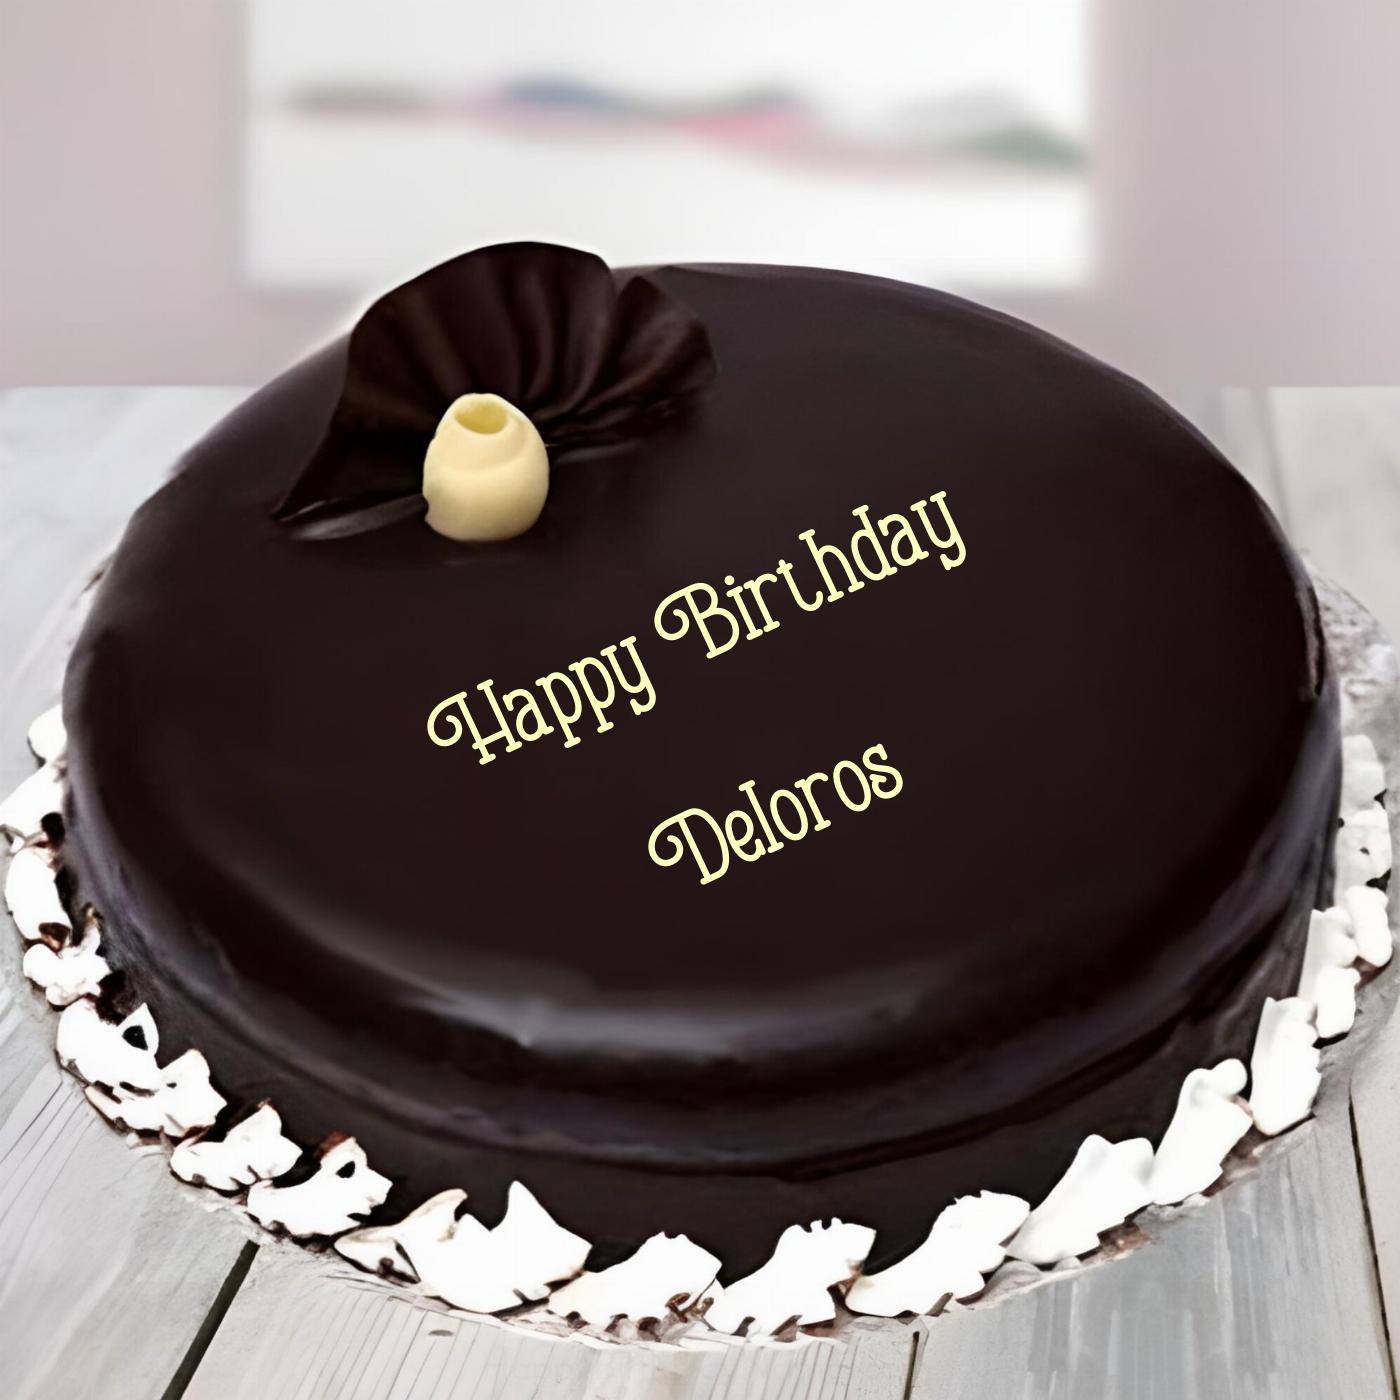 Happy Birthday Deloros Beautiful Chocolate Cake